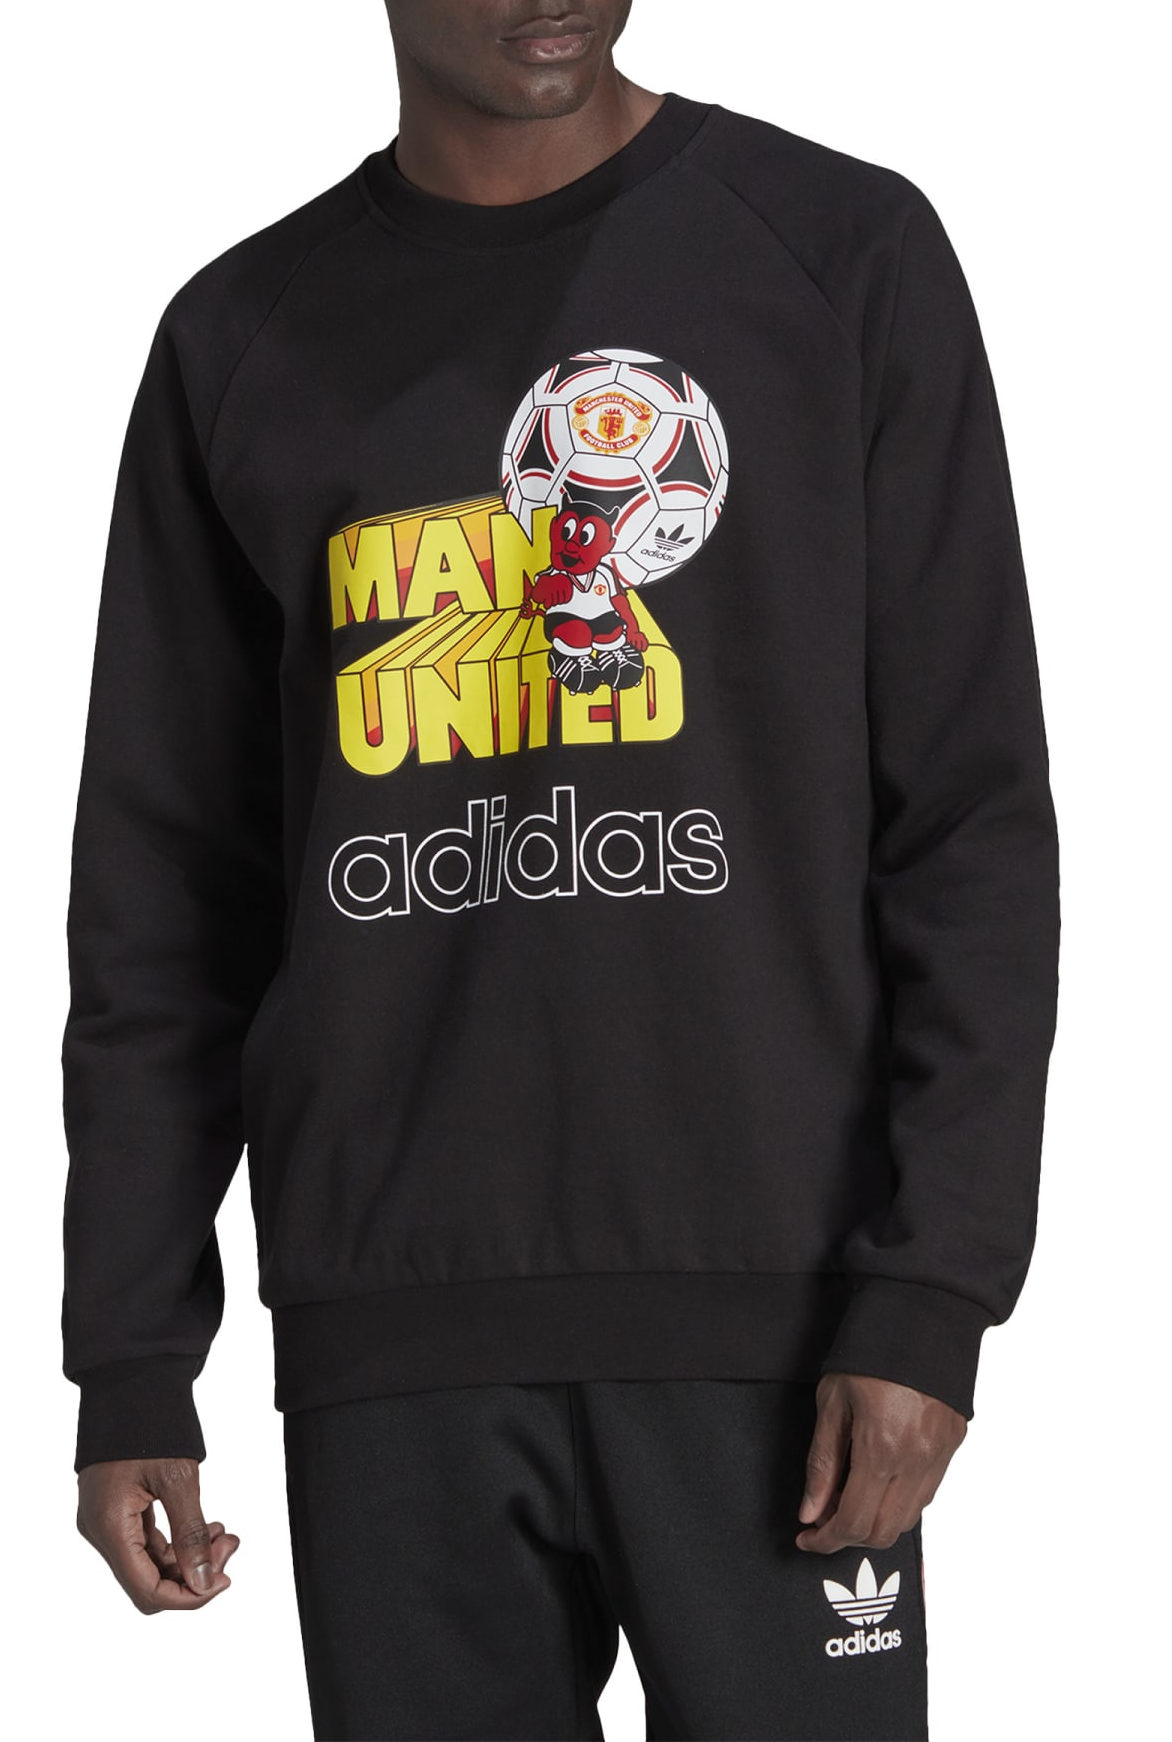 Sweatshirt adidas Originals Man Utd GR crew